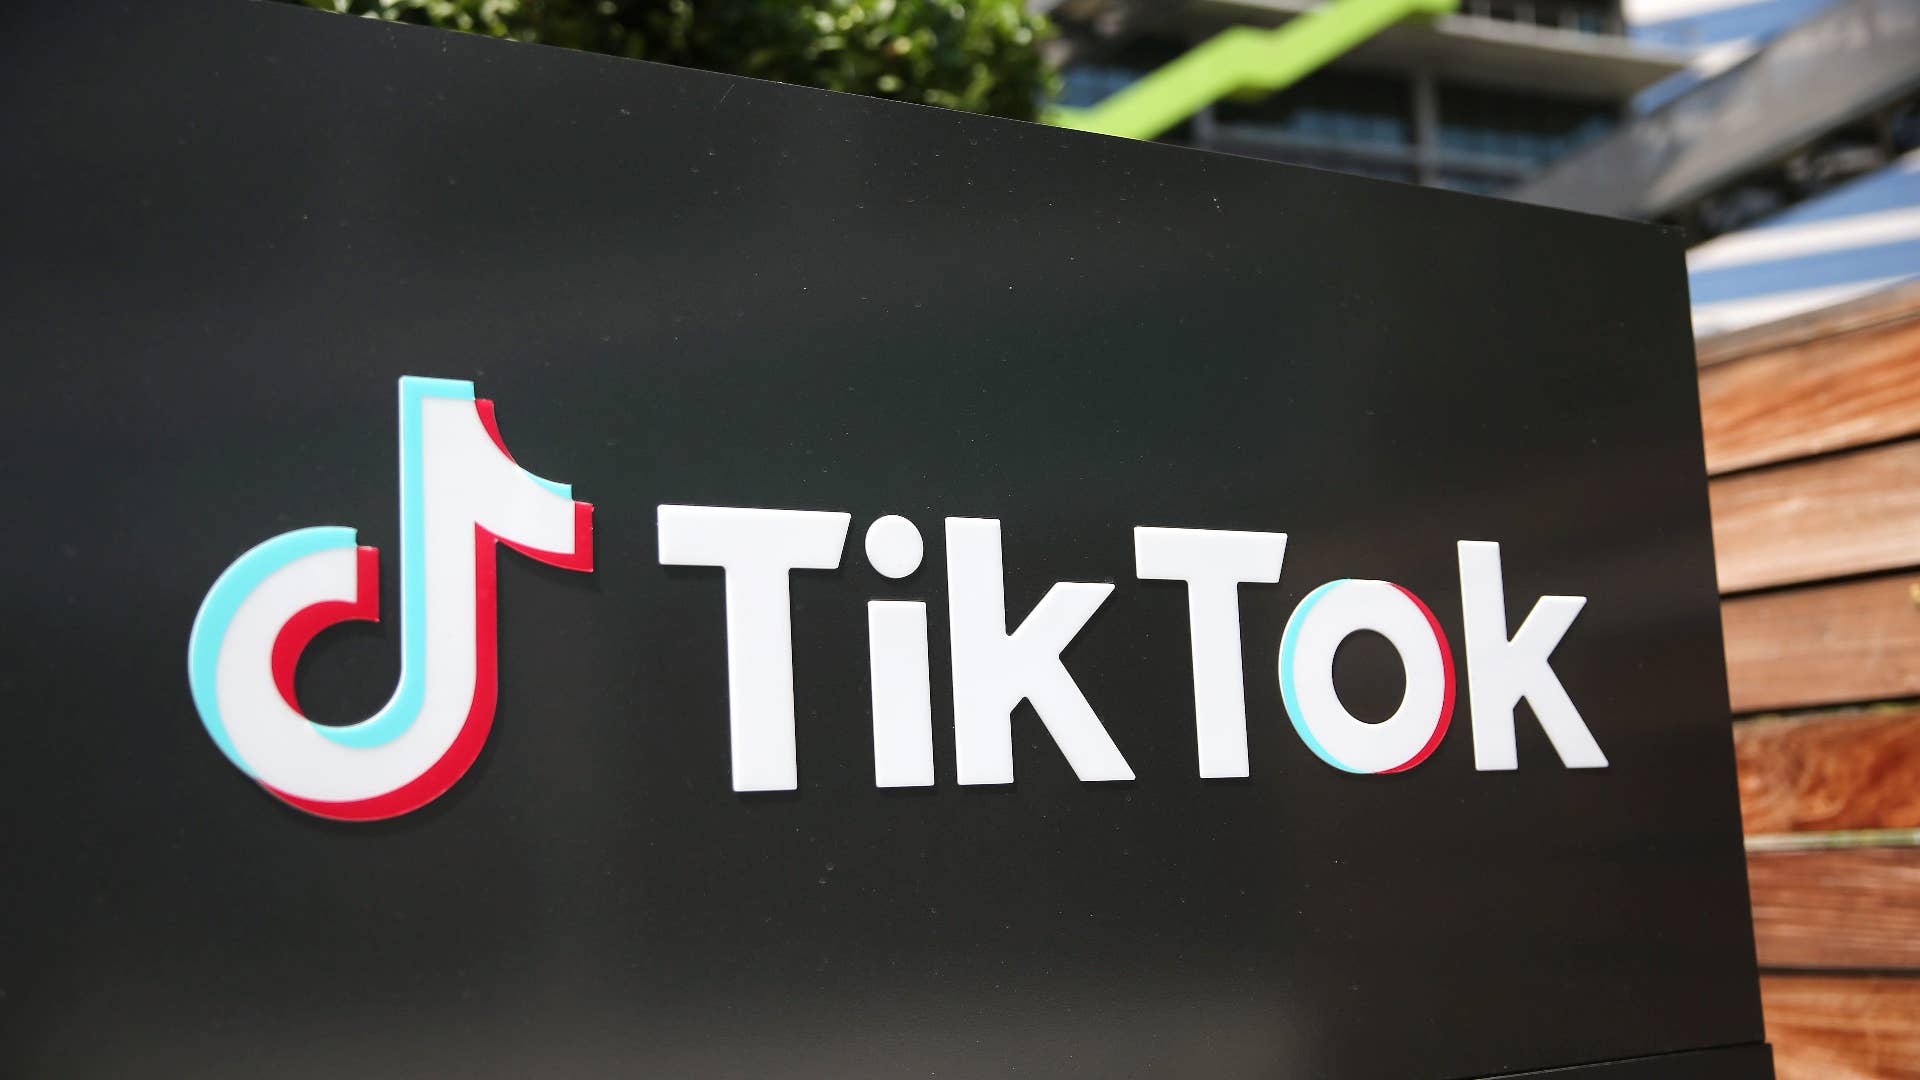 The TikTok logo is displayed outside a TikTok office.